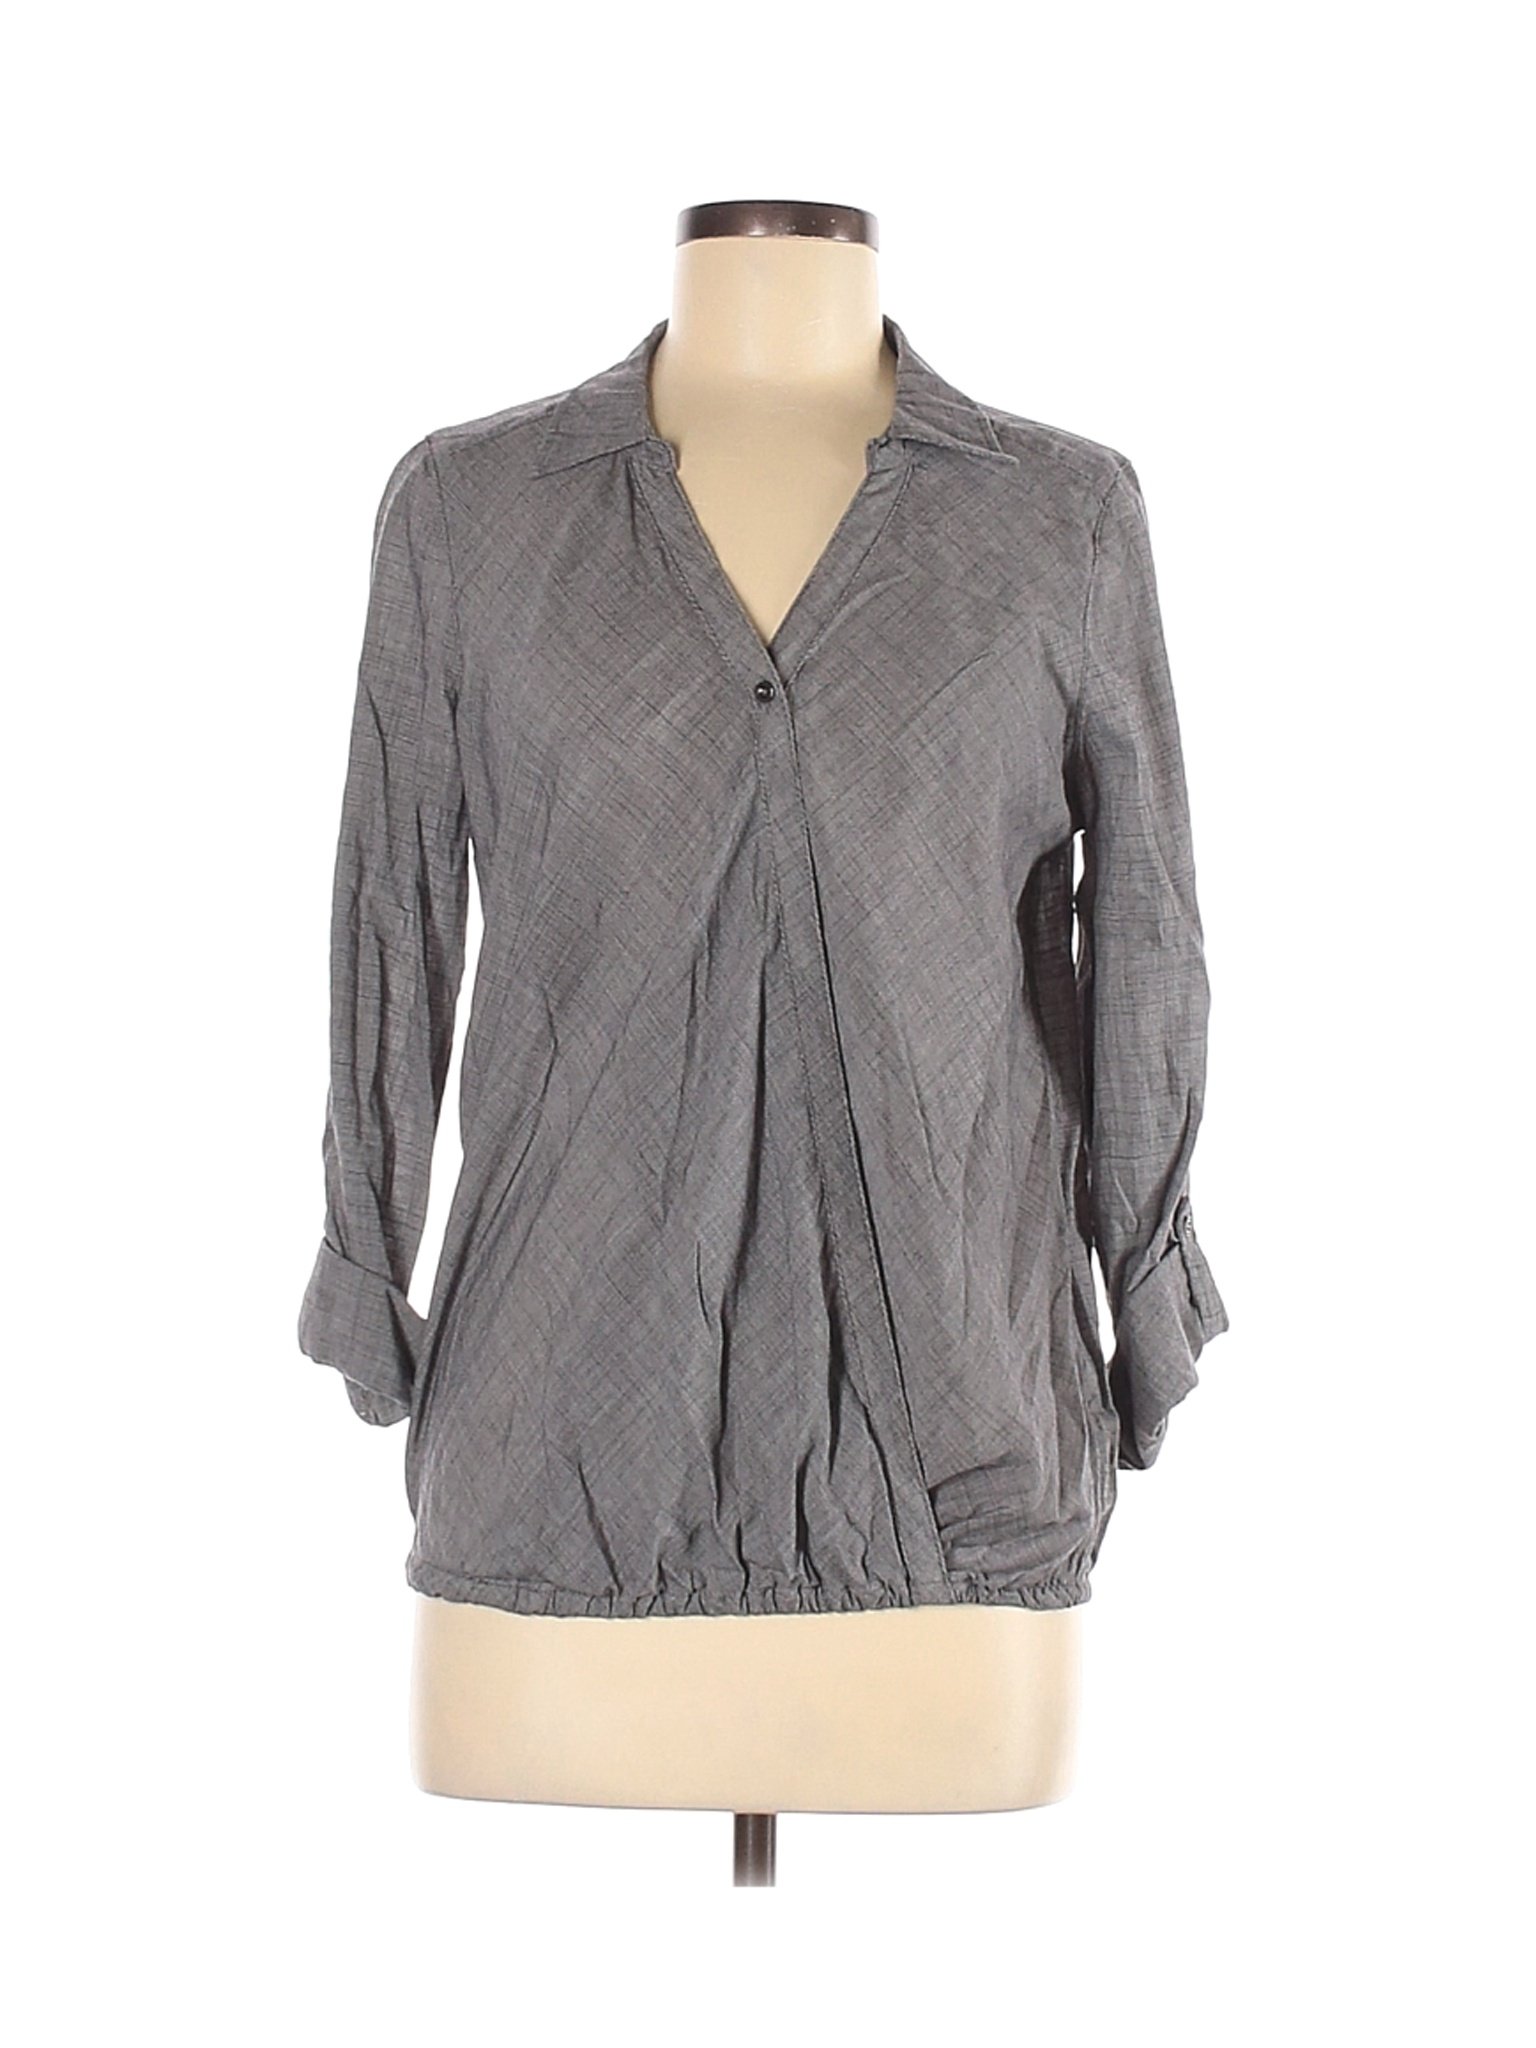 Maurices Women Gray Long Sleeve Blouse M | eBay